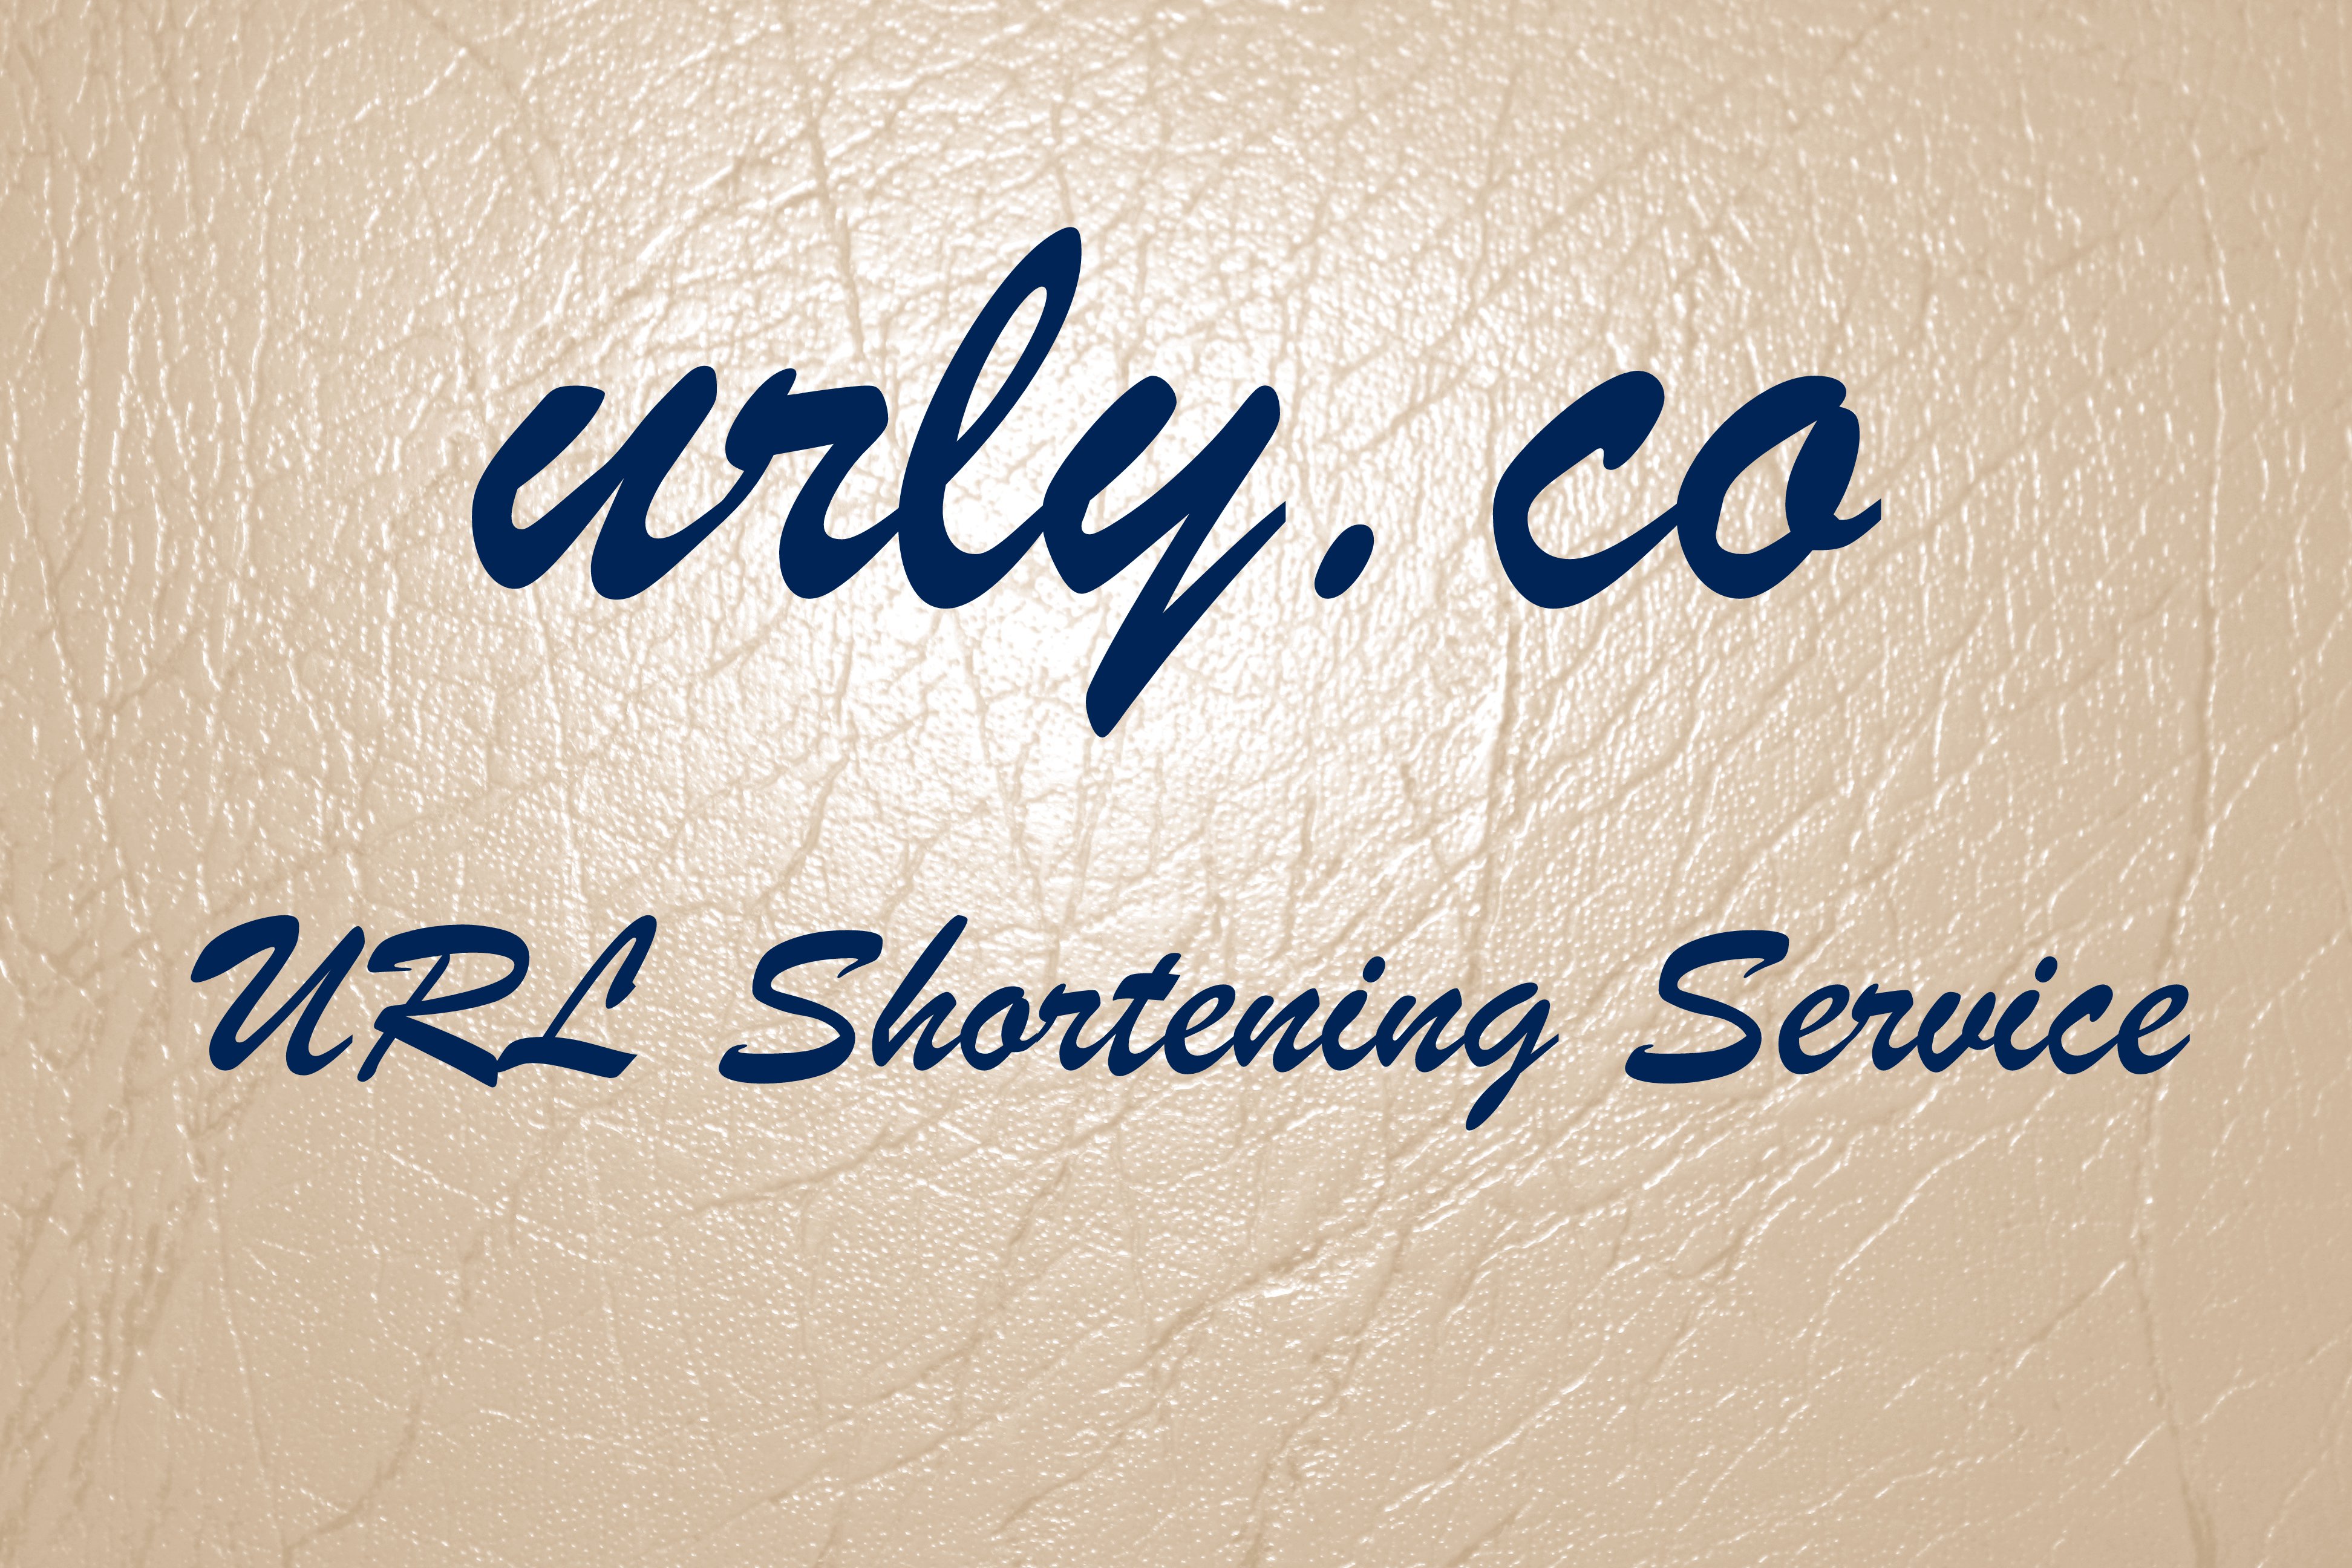 URL Shortening Service